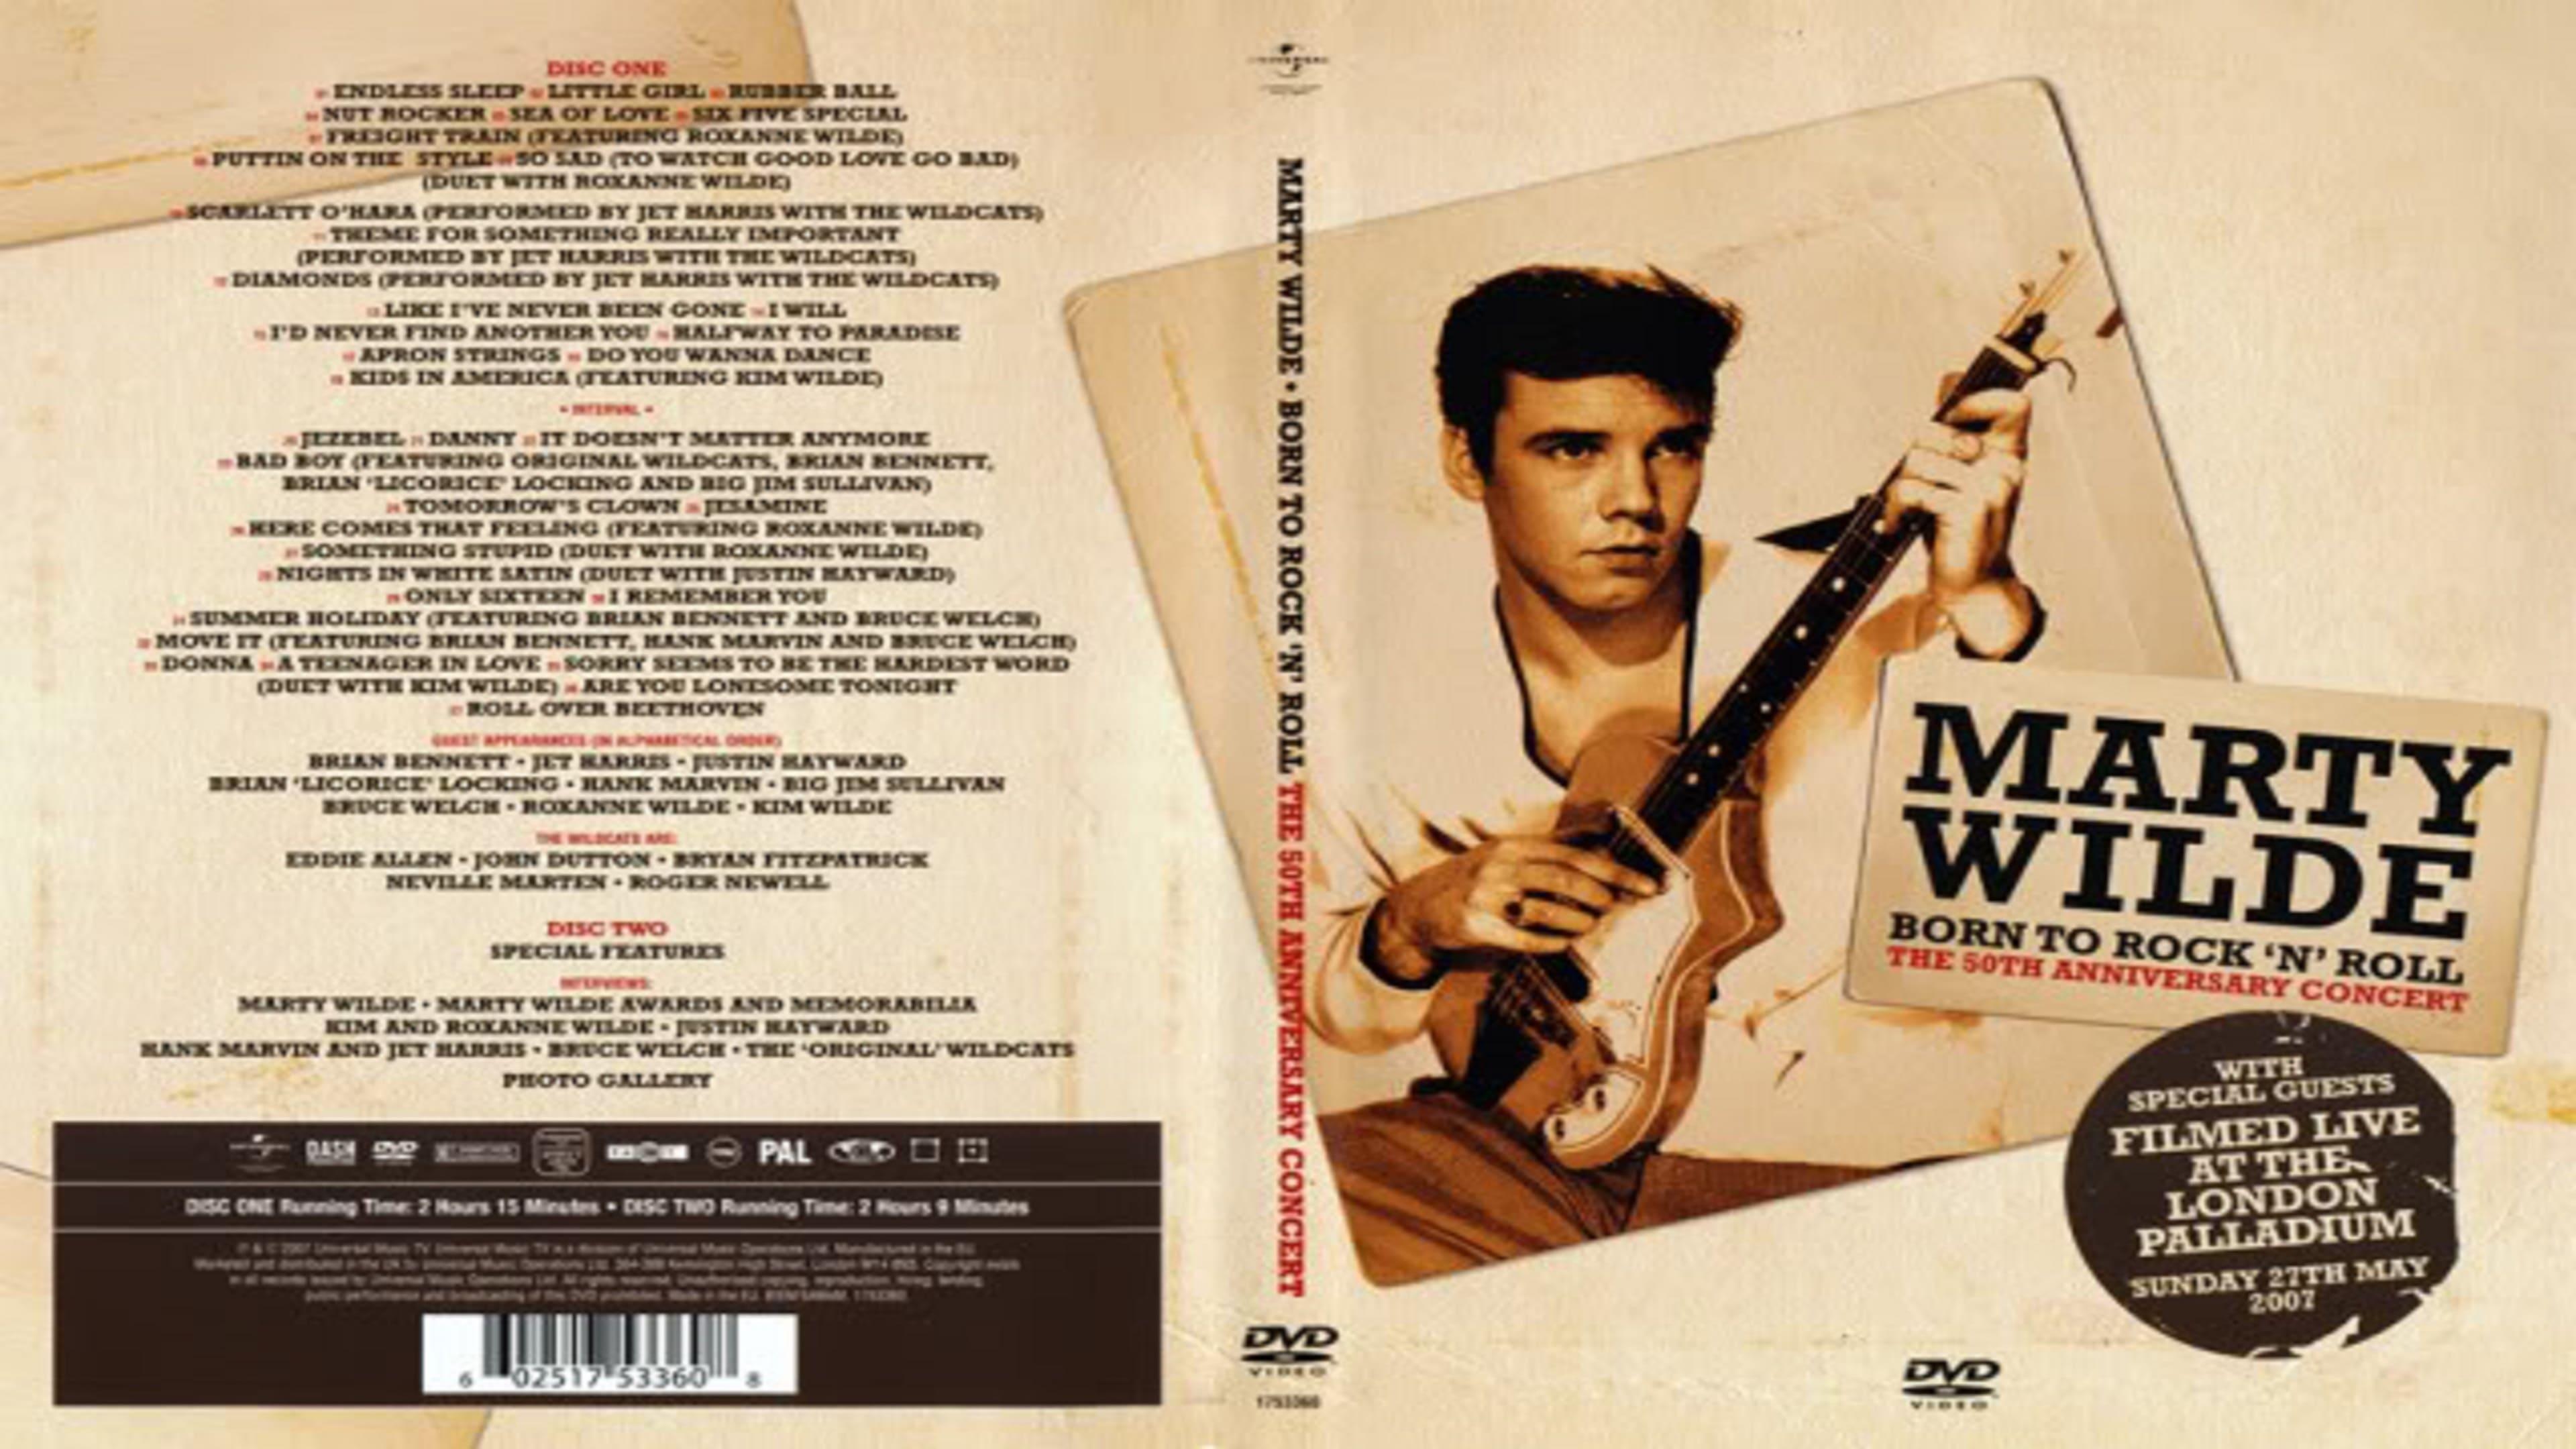 Marty Wilde - Born To Rock 'n' Roll backdrop